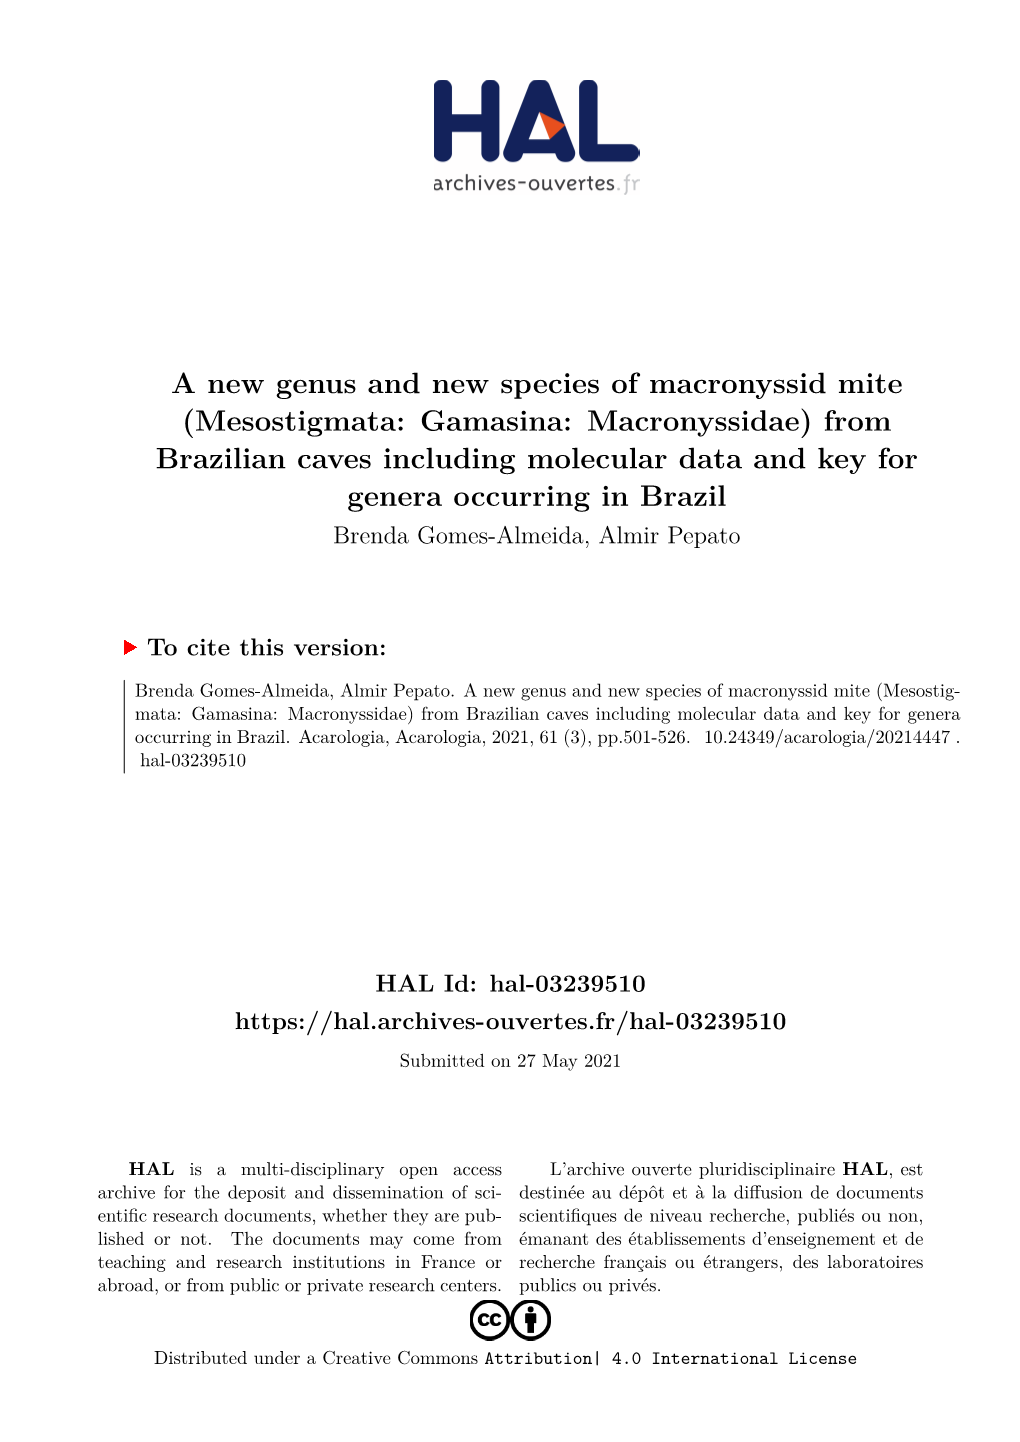 A New Genus and New Species of Macronyssid Mite (Mesostigmata: Gamasina: Macronyssidae) from Brazilian Caves Including Molecular